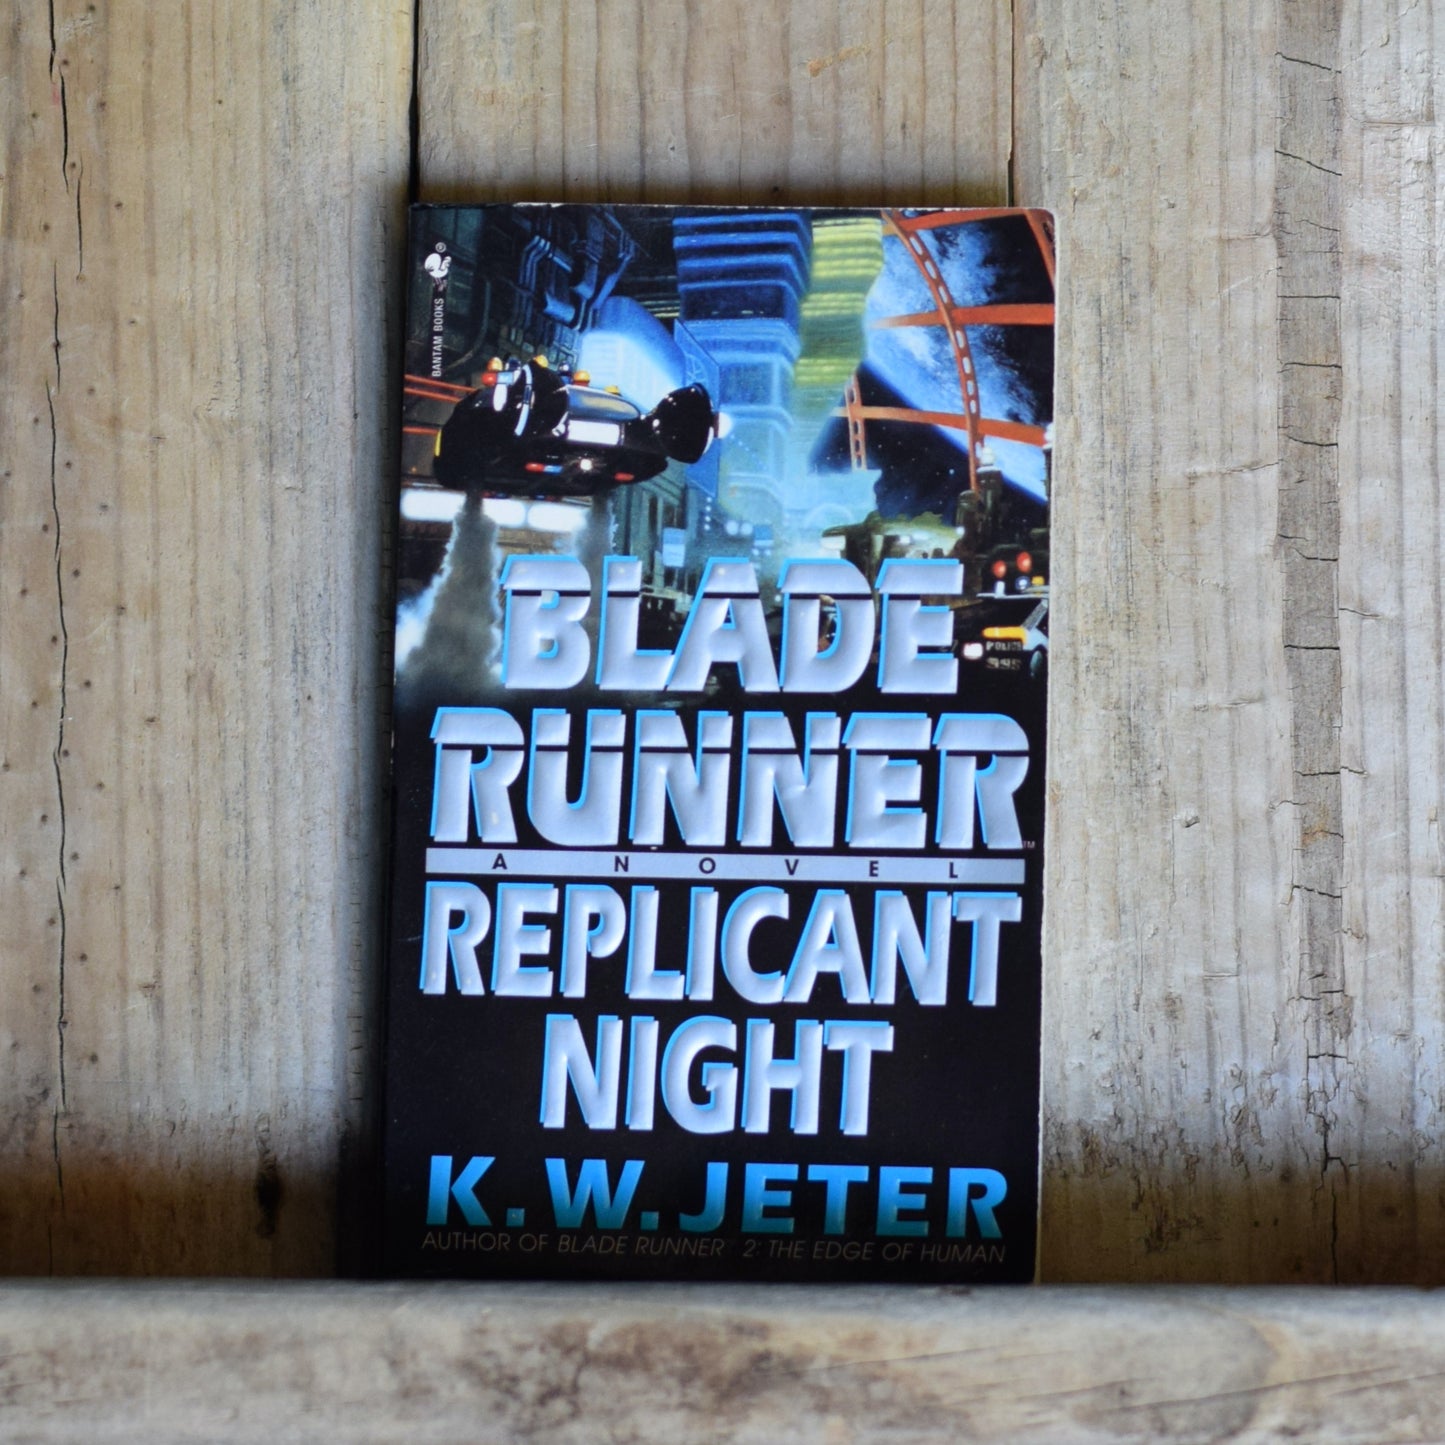 Vintage Sci-fi Paperback: K W Jeter - Blade Runner, Replicant Night FIRST PRINTING